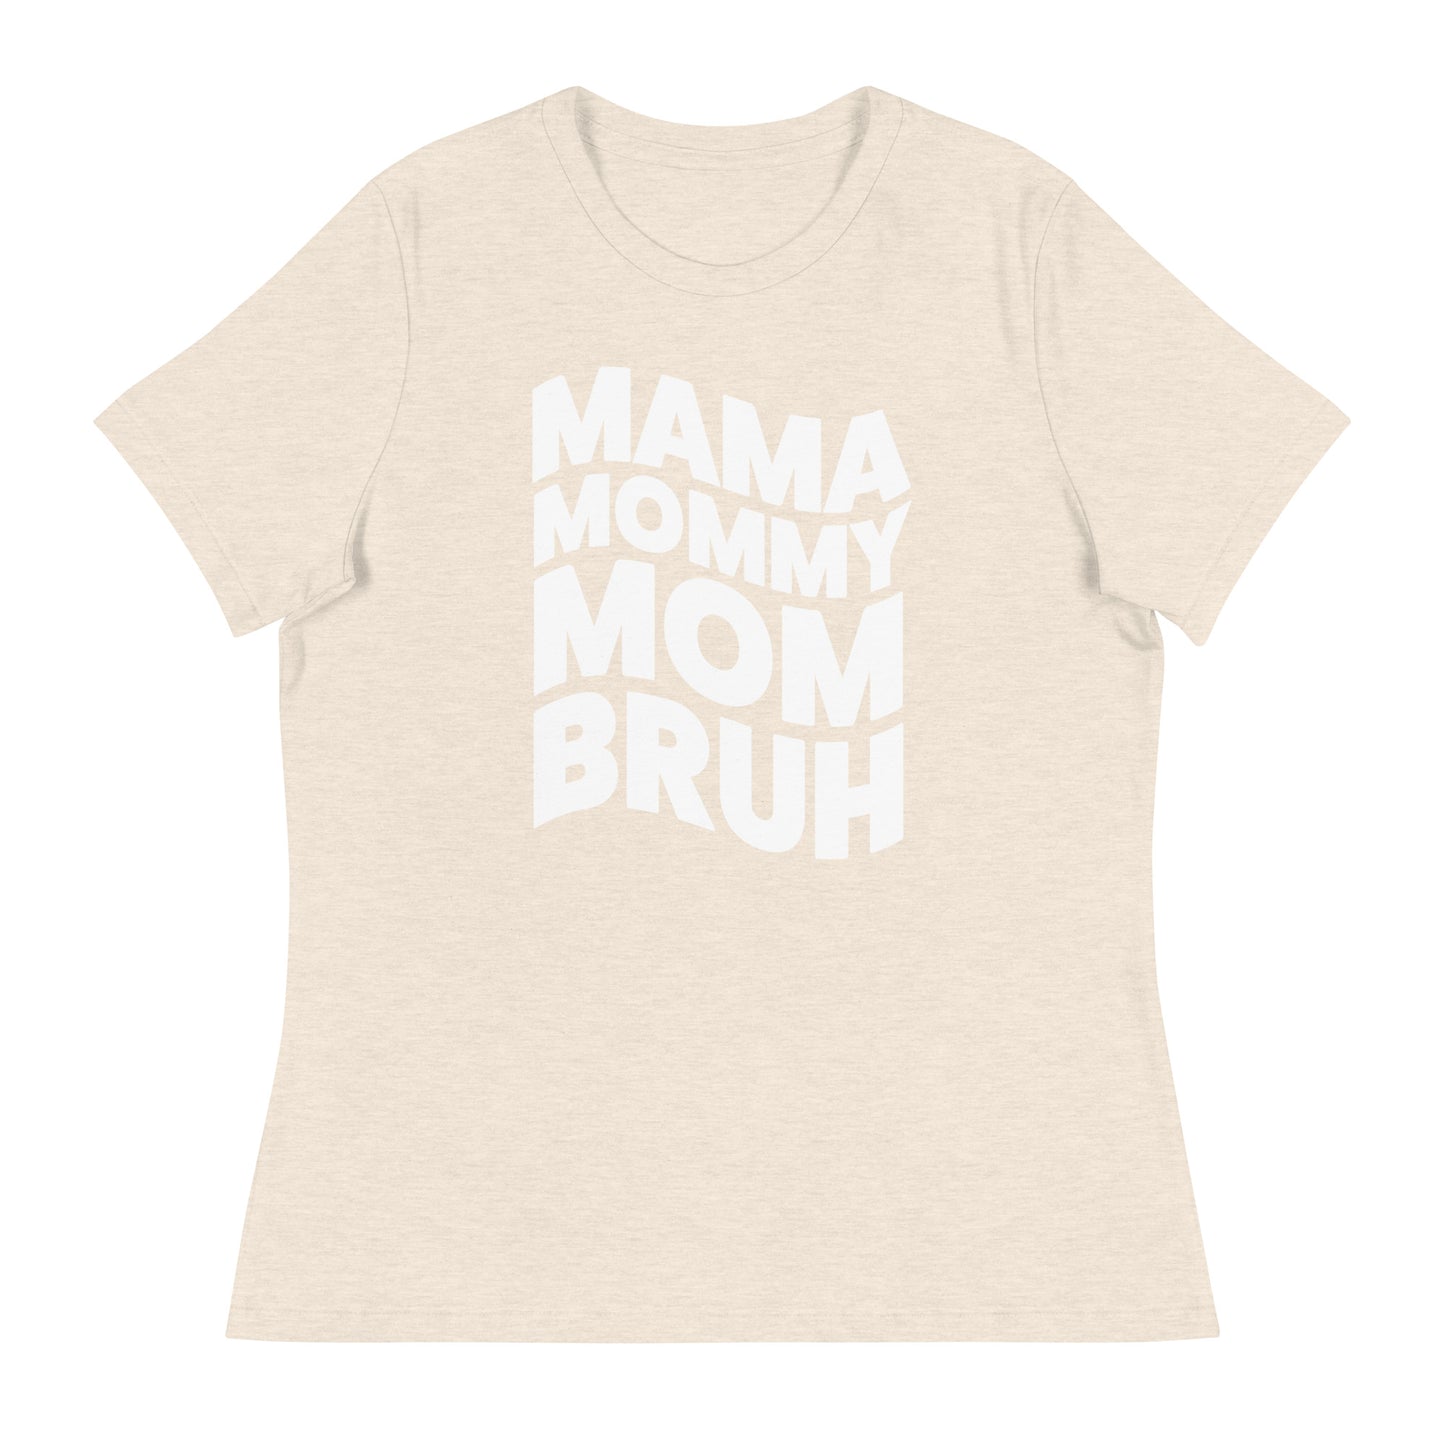 Mama Mommy Mom Bruh Women's Tee